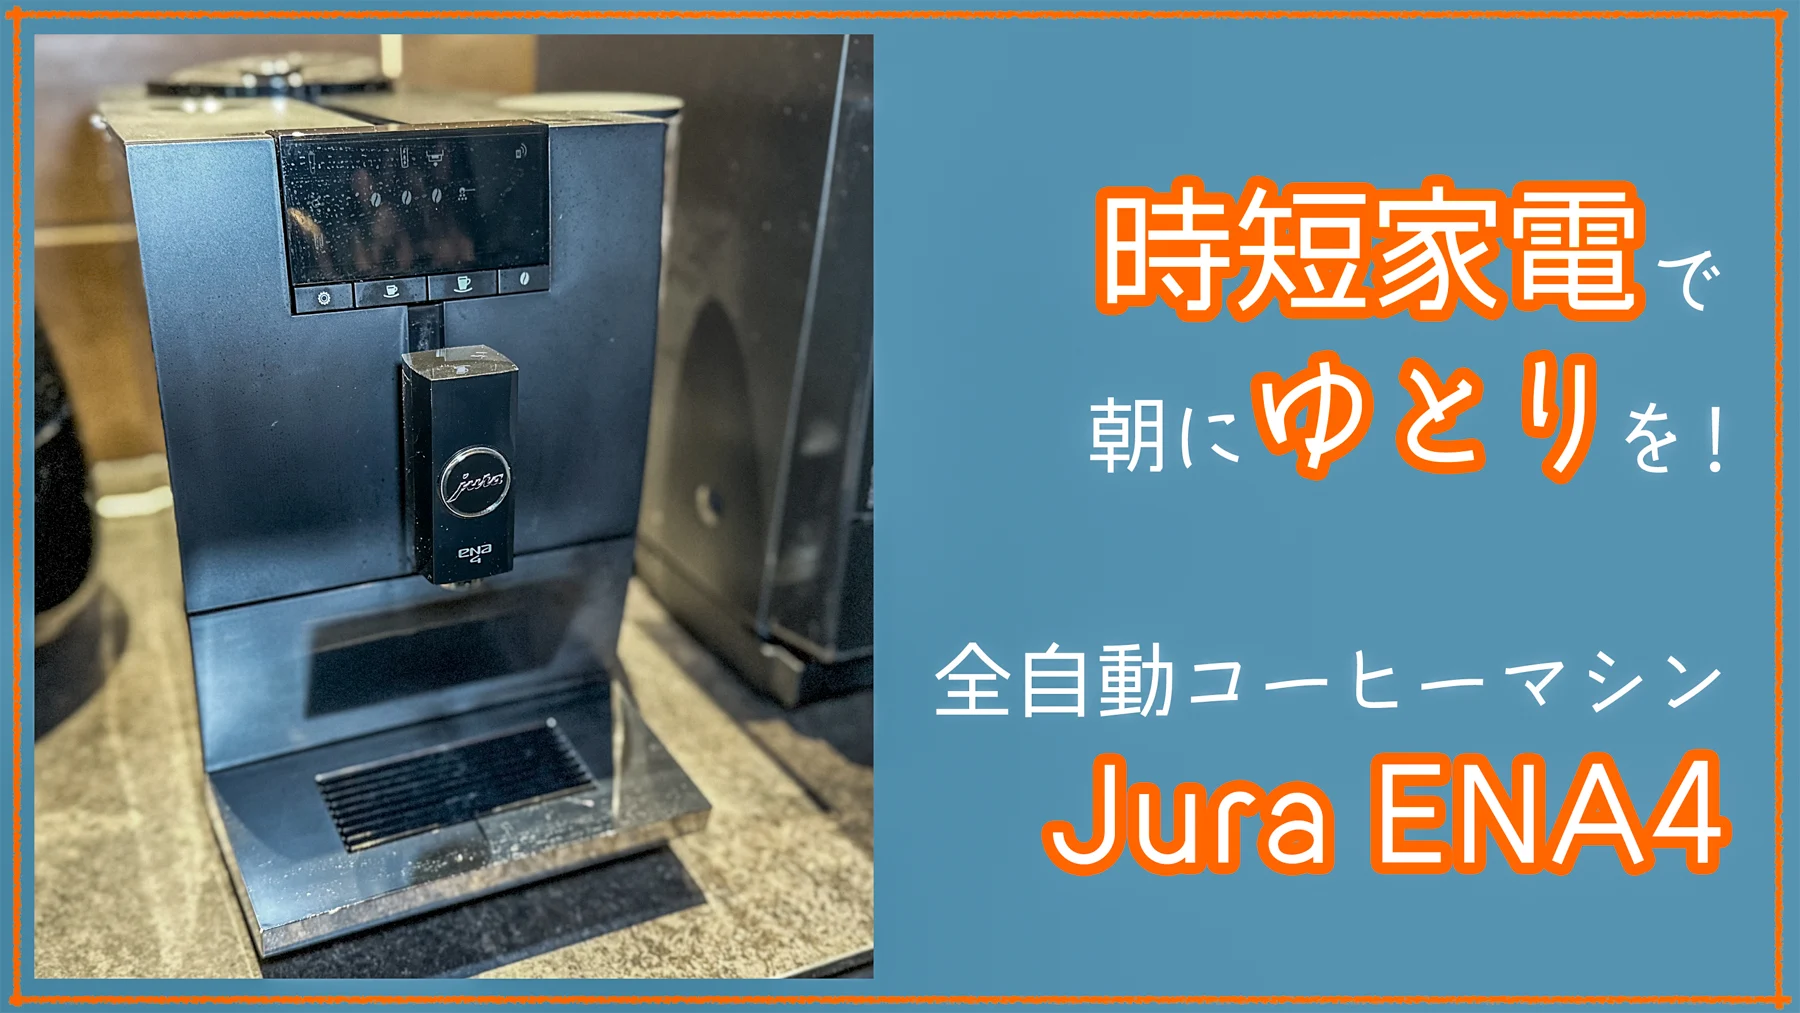 jura 全自動コーヒーマシン ena4ブラック kirimaja.garuda-indonesia.com